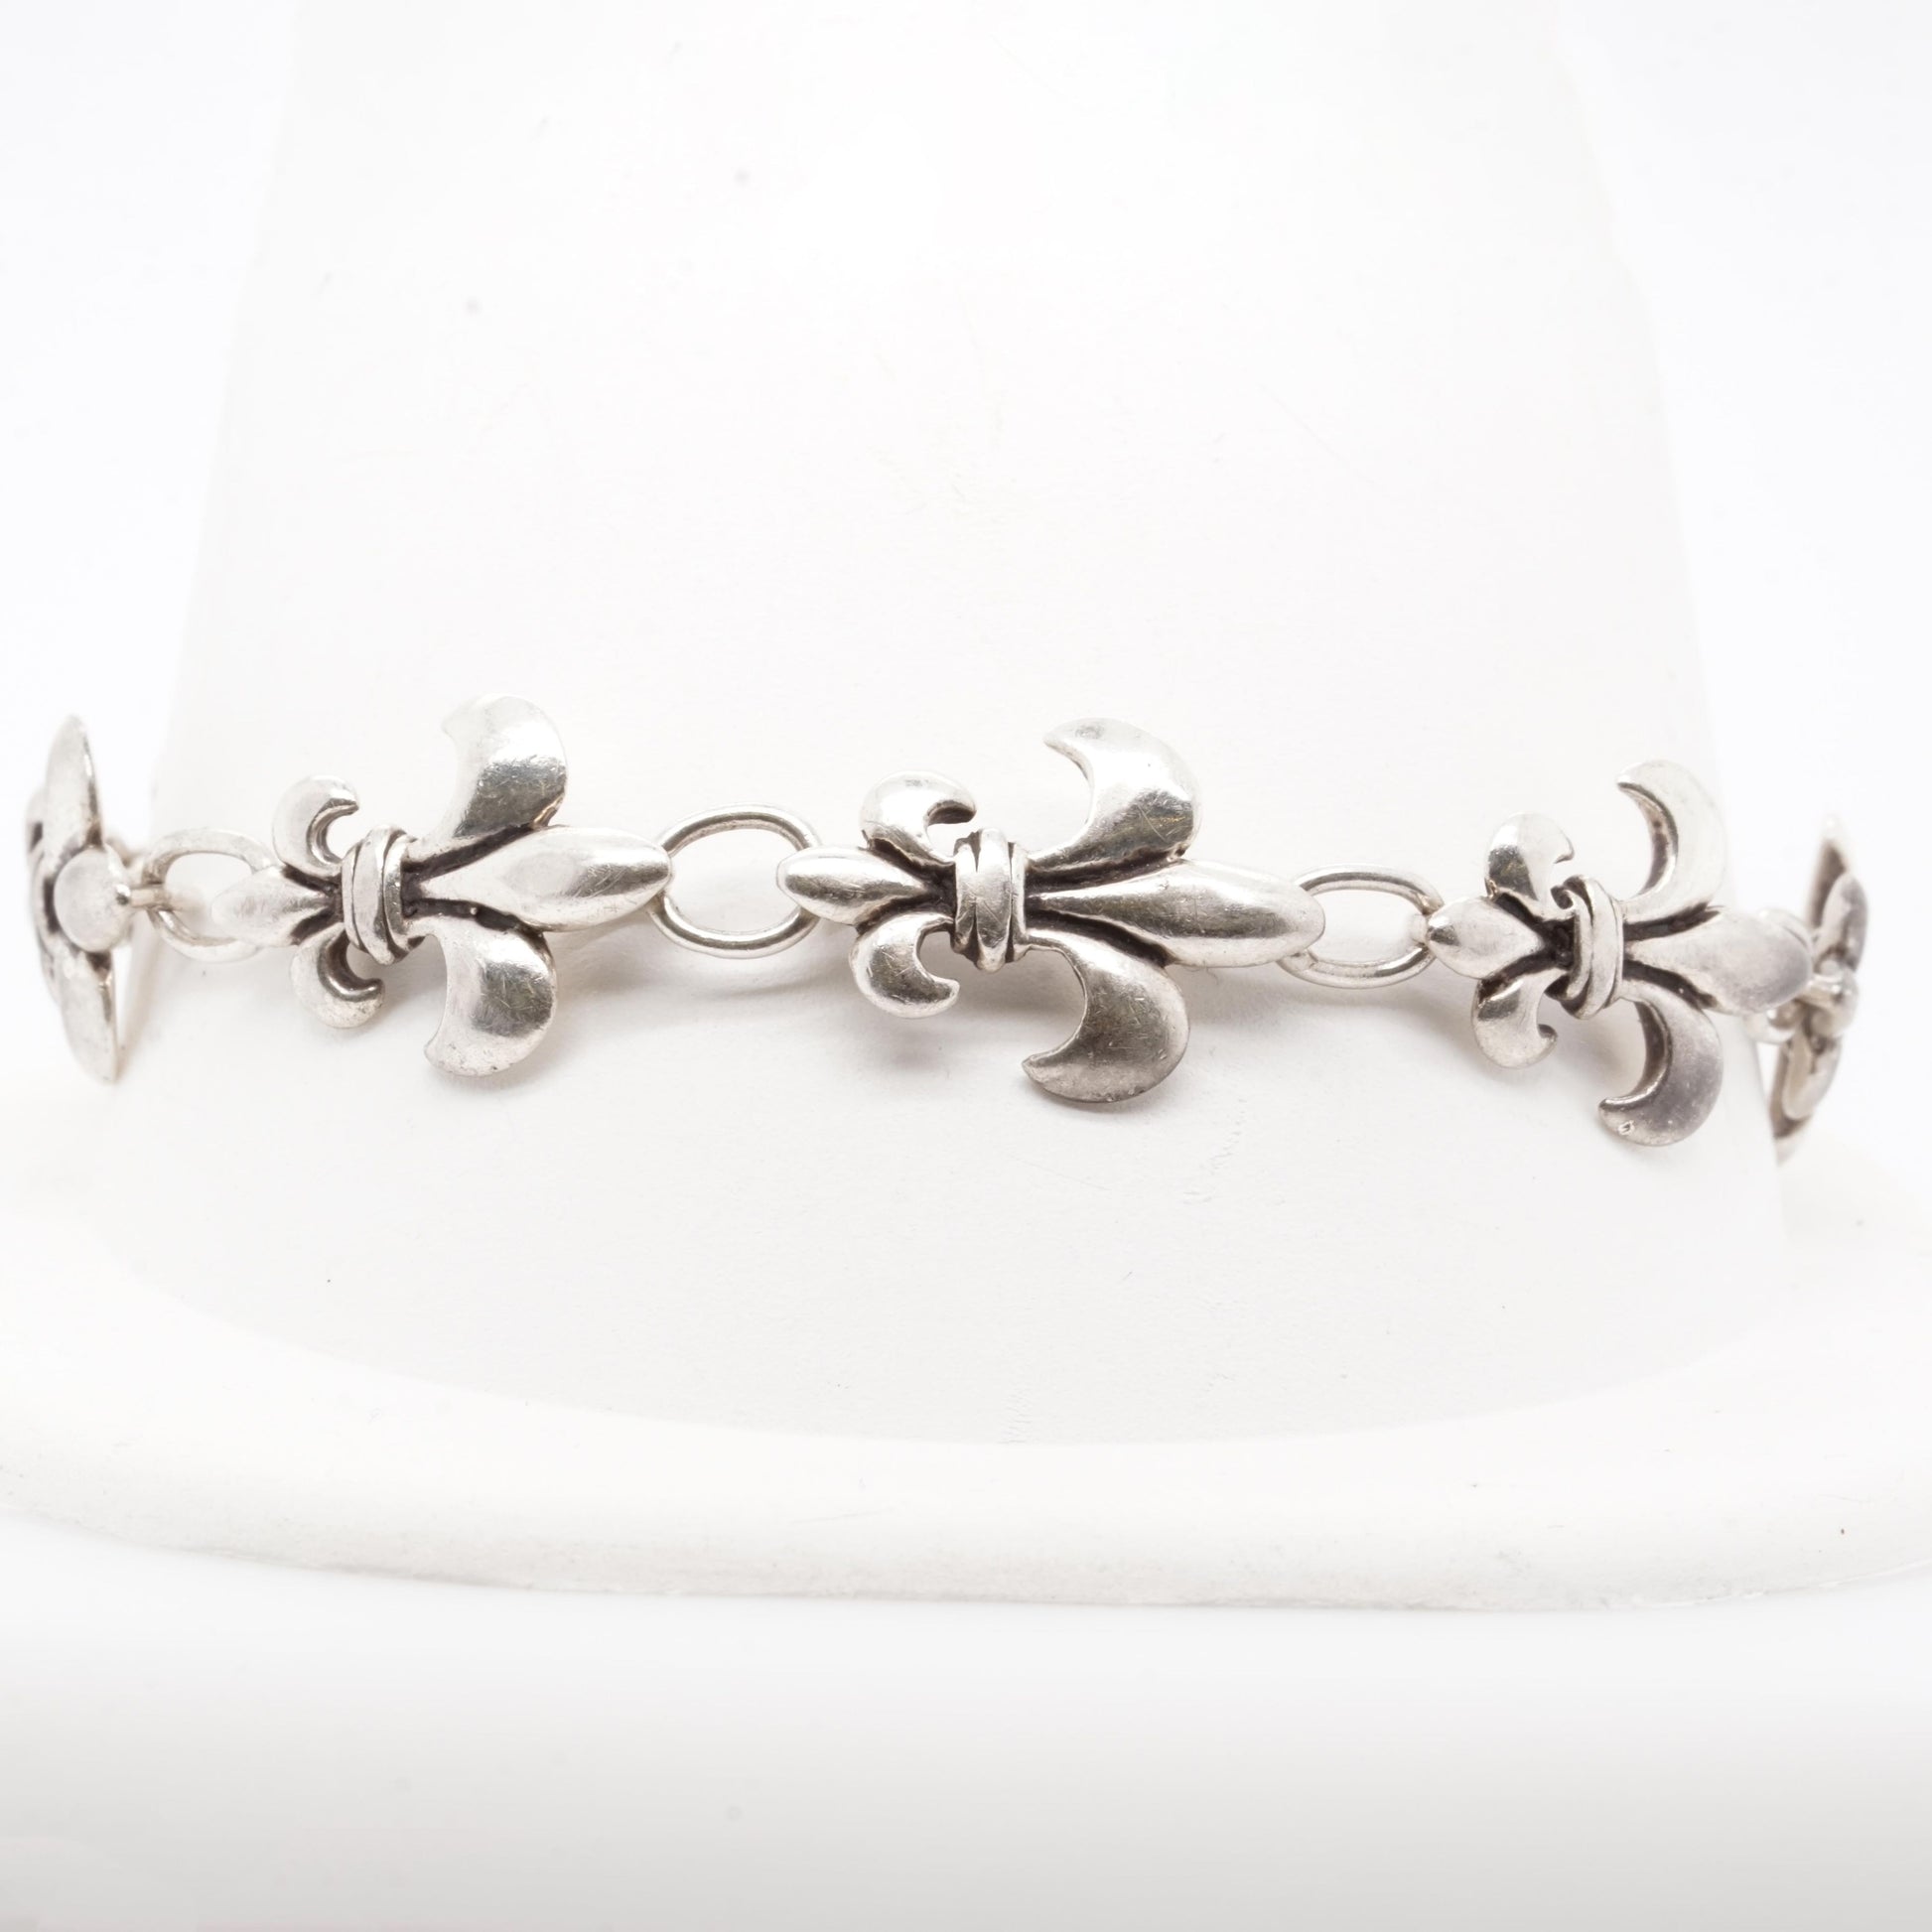 Louis Vuitton Style Sparkly Triple Fleur Earrings